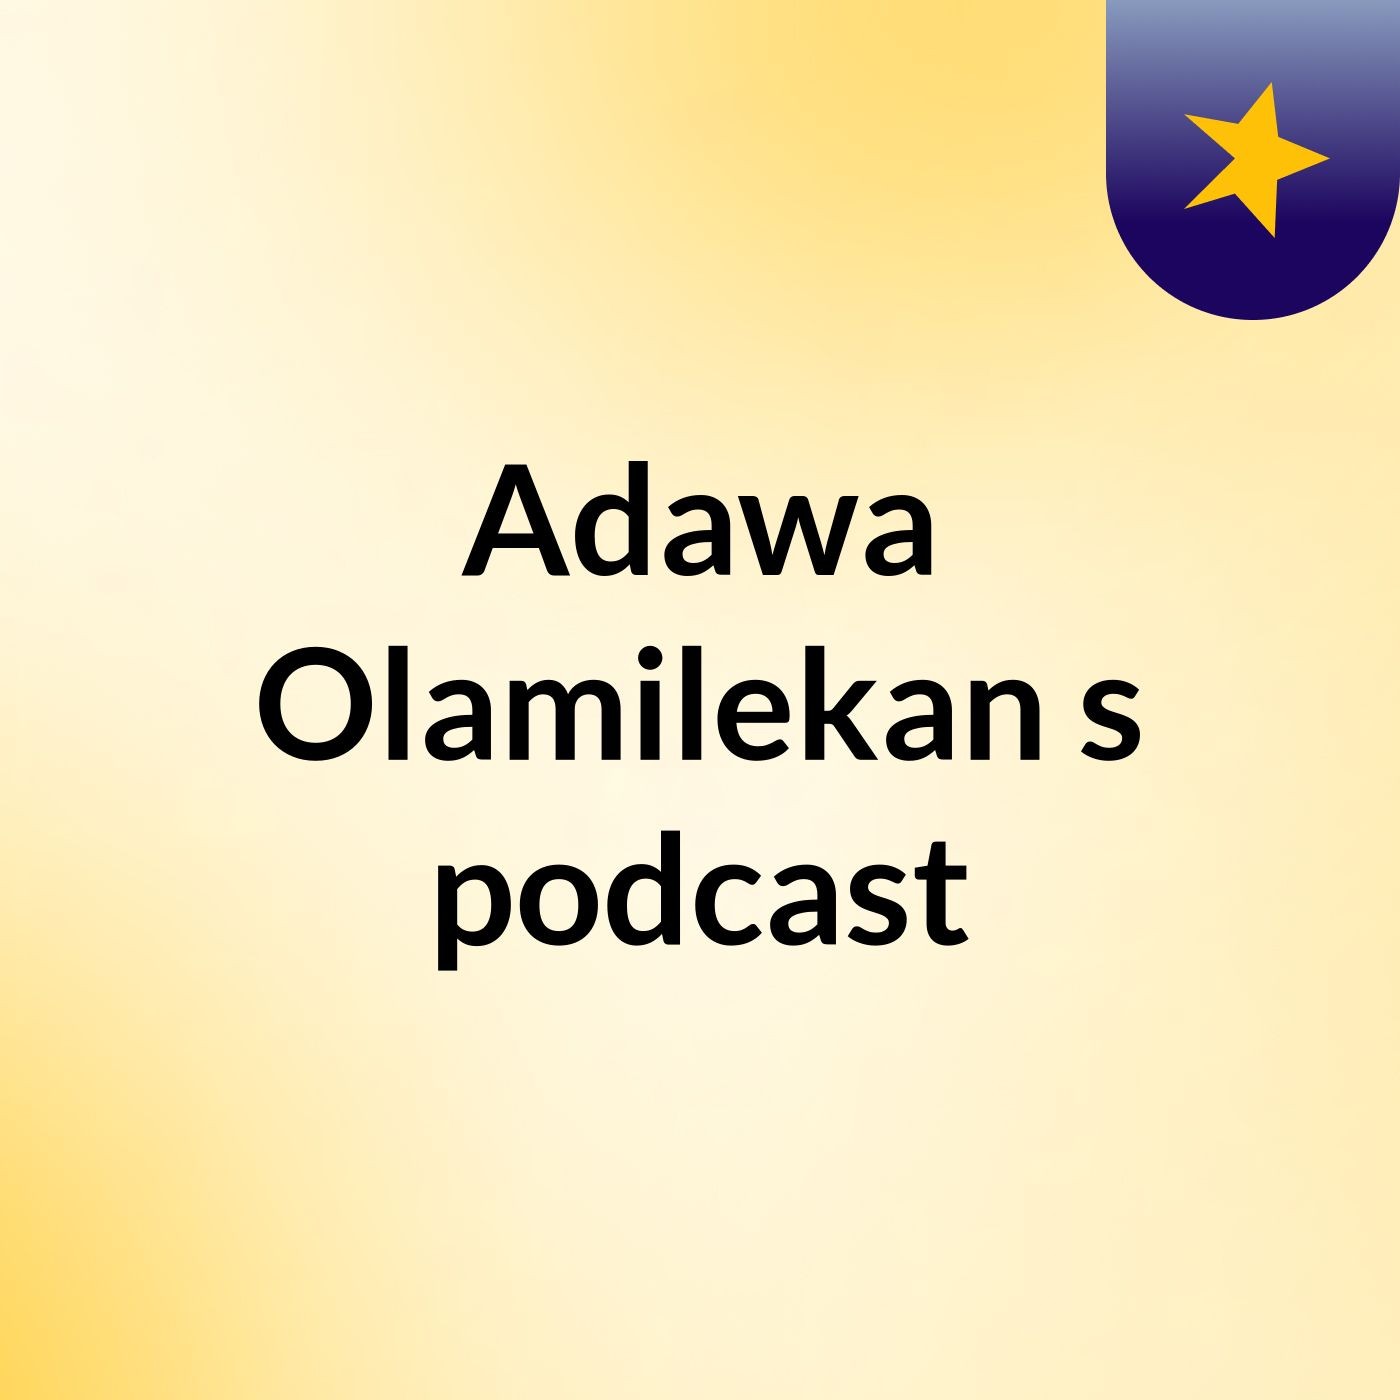 Adawa Olamilekan's podcast